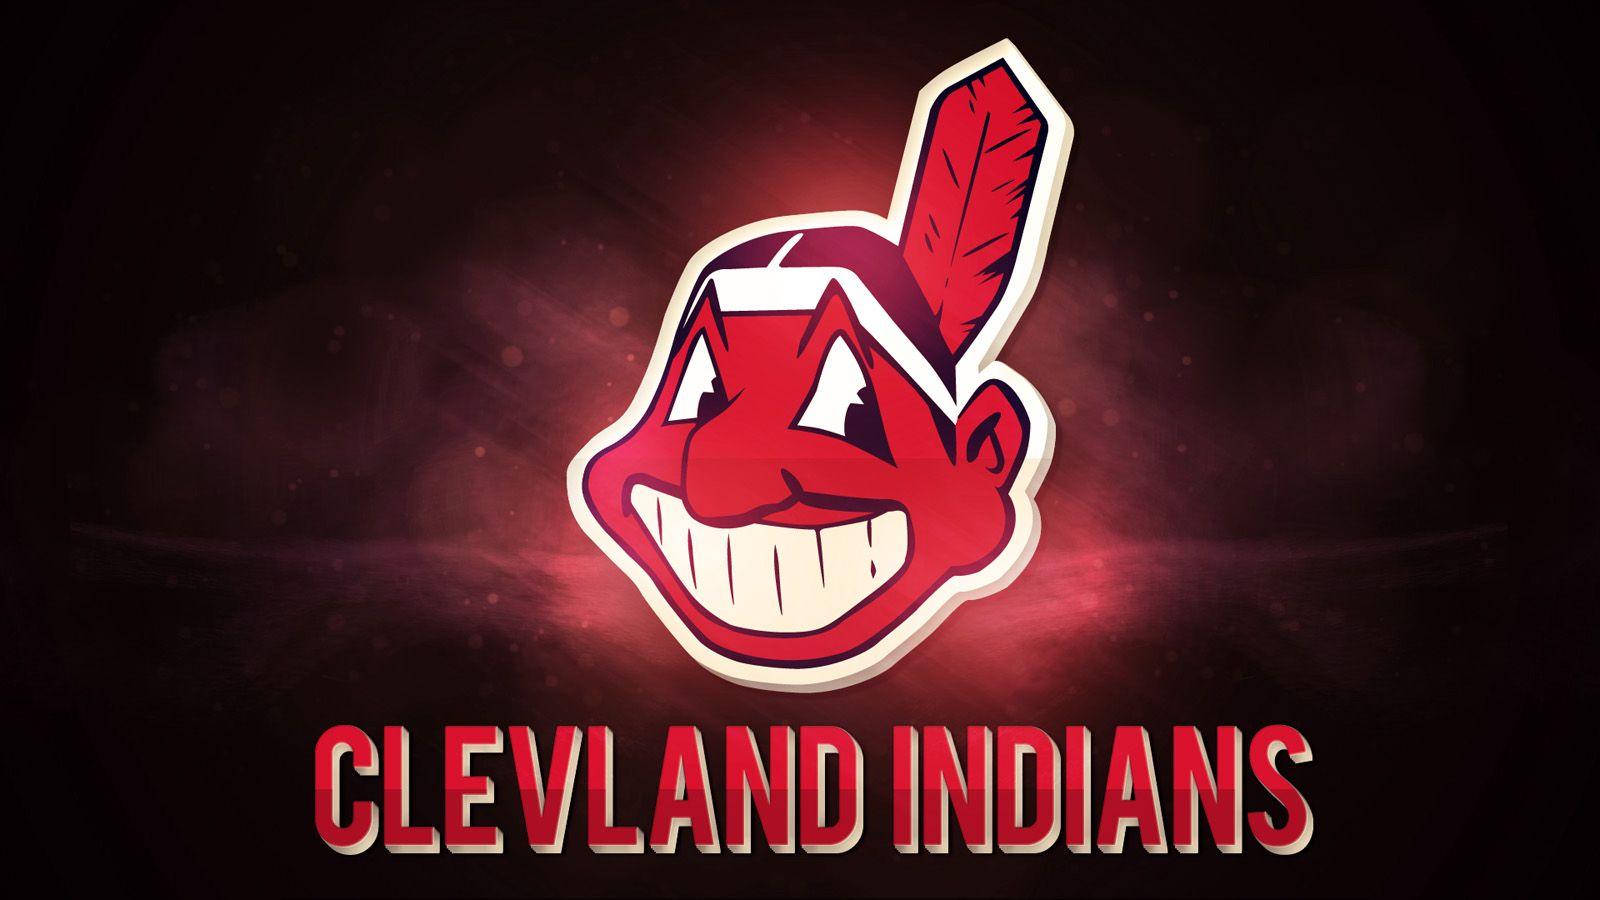 Cleveland Indians Wallpaper 15157 1600x900 px